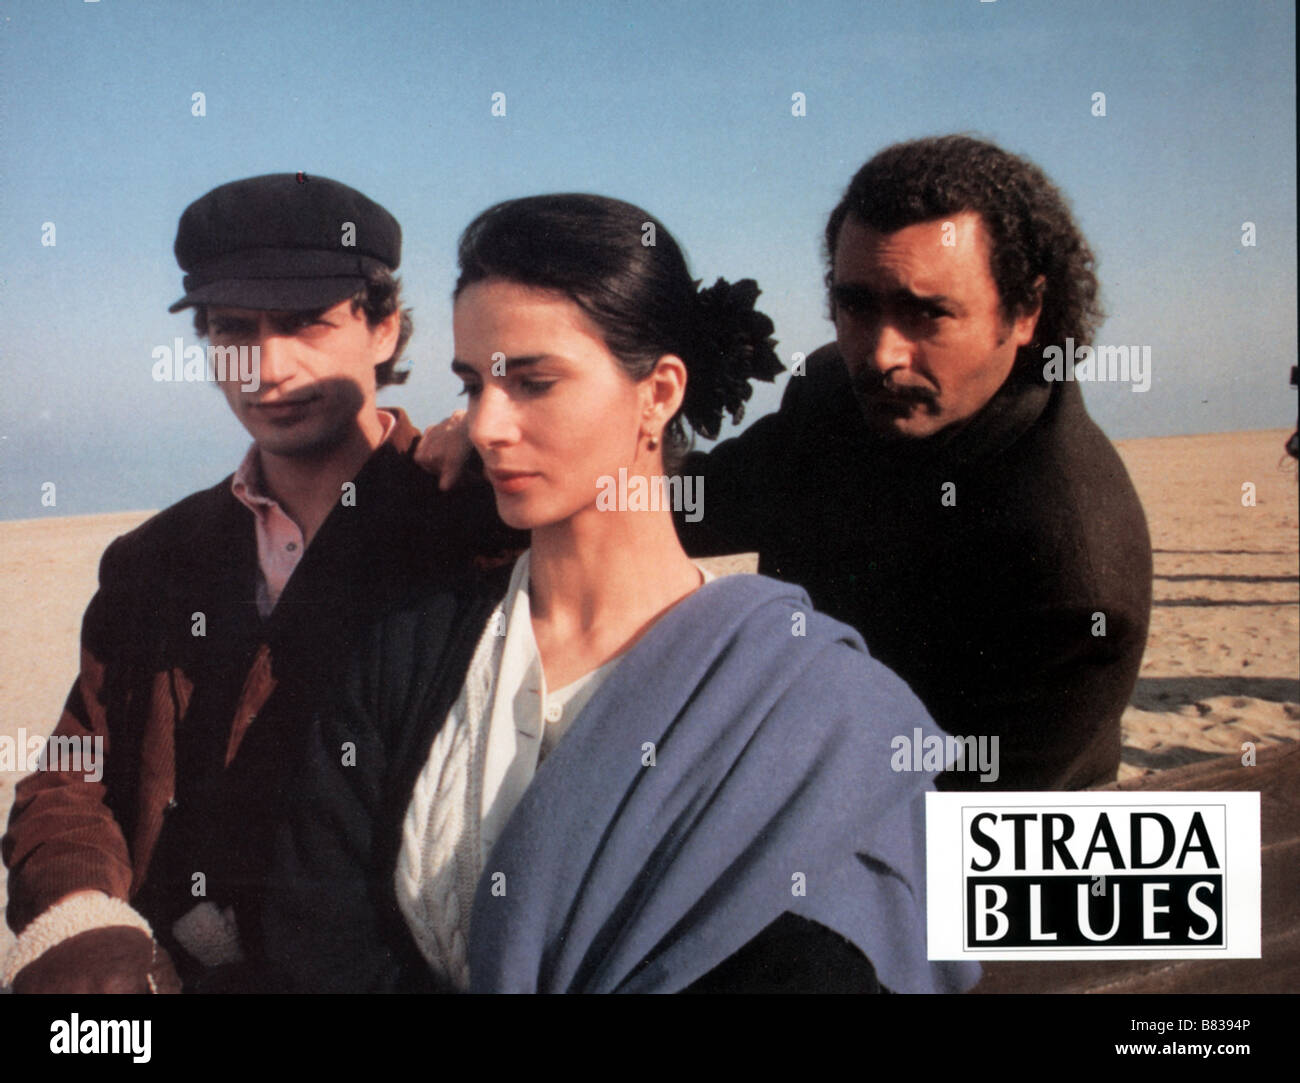 Strada blues Turnè  Year: 1990 - Italy Fabrizio Bentivoglio , Laura Morante , Diego Abatantuono  Director: Gabriele Salvatores Stock Photo